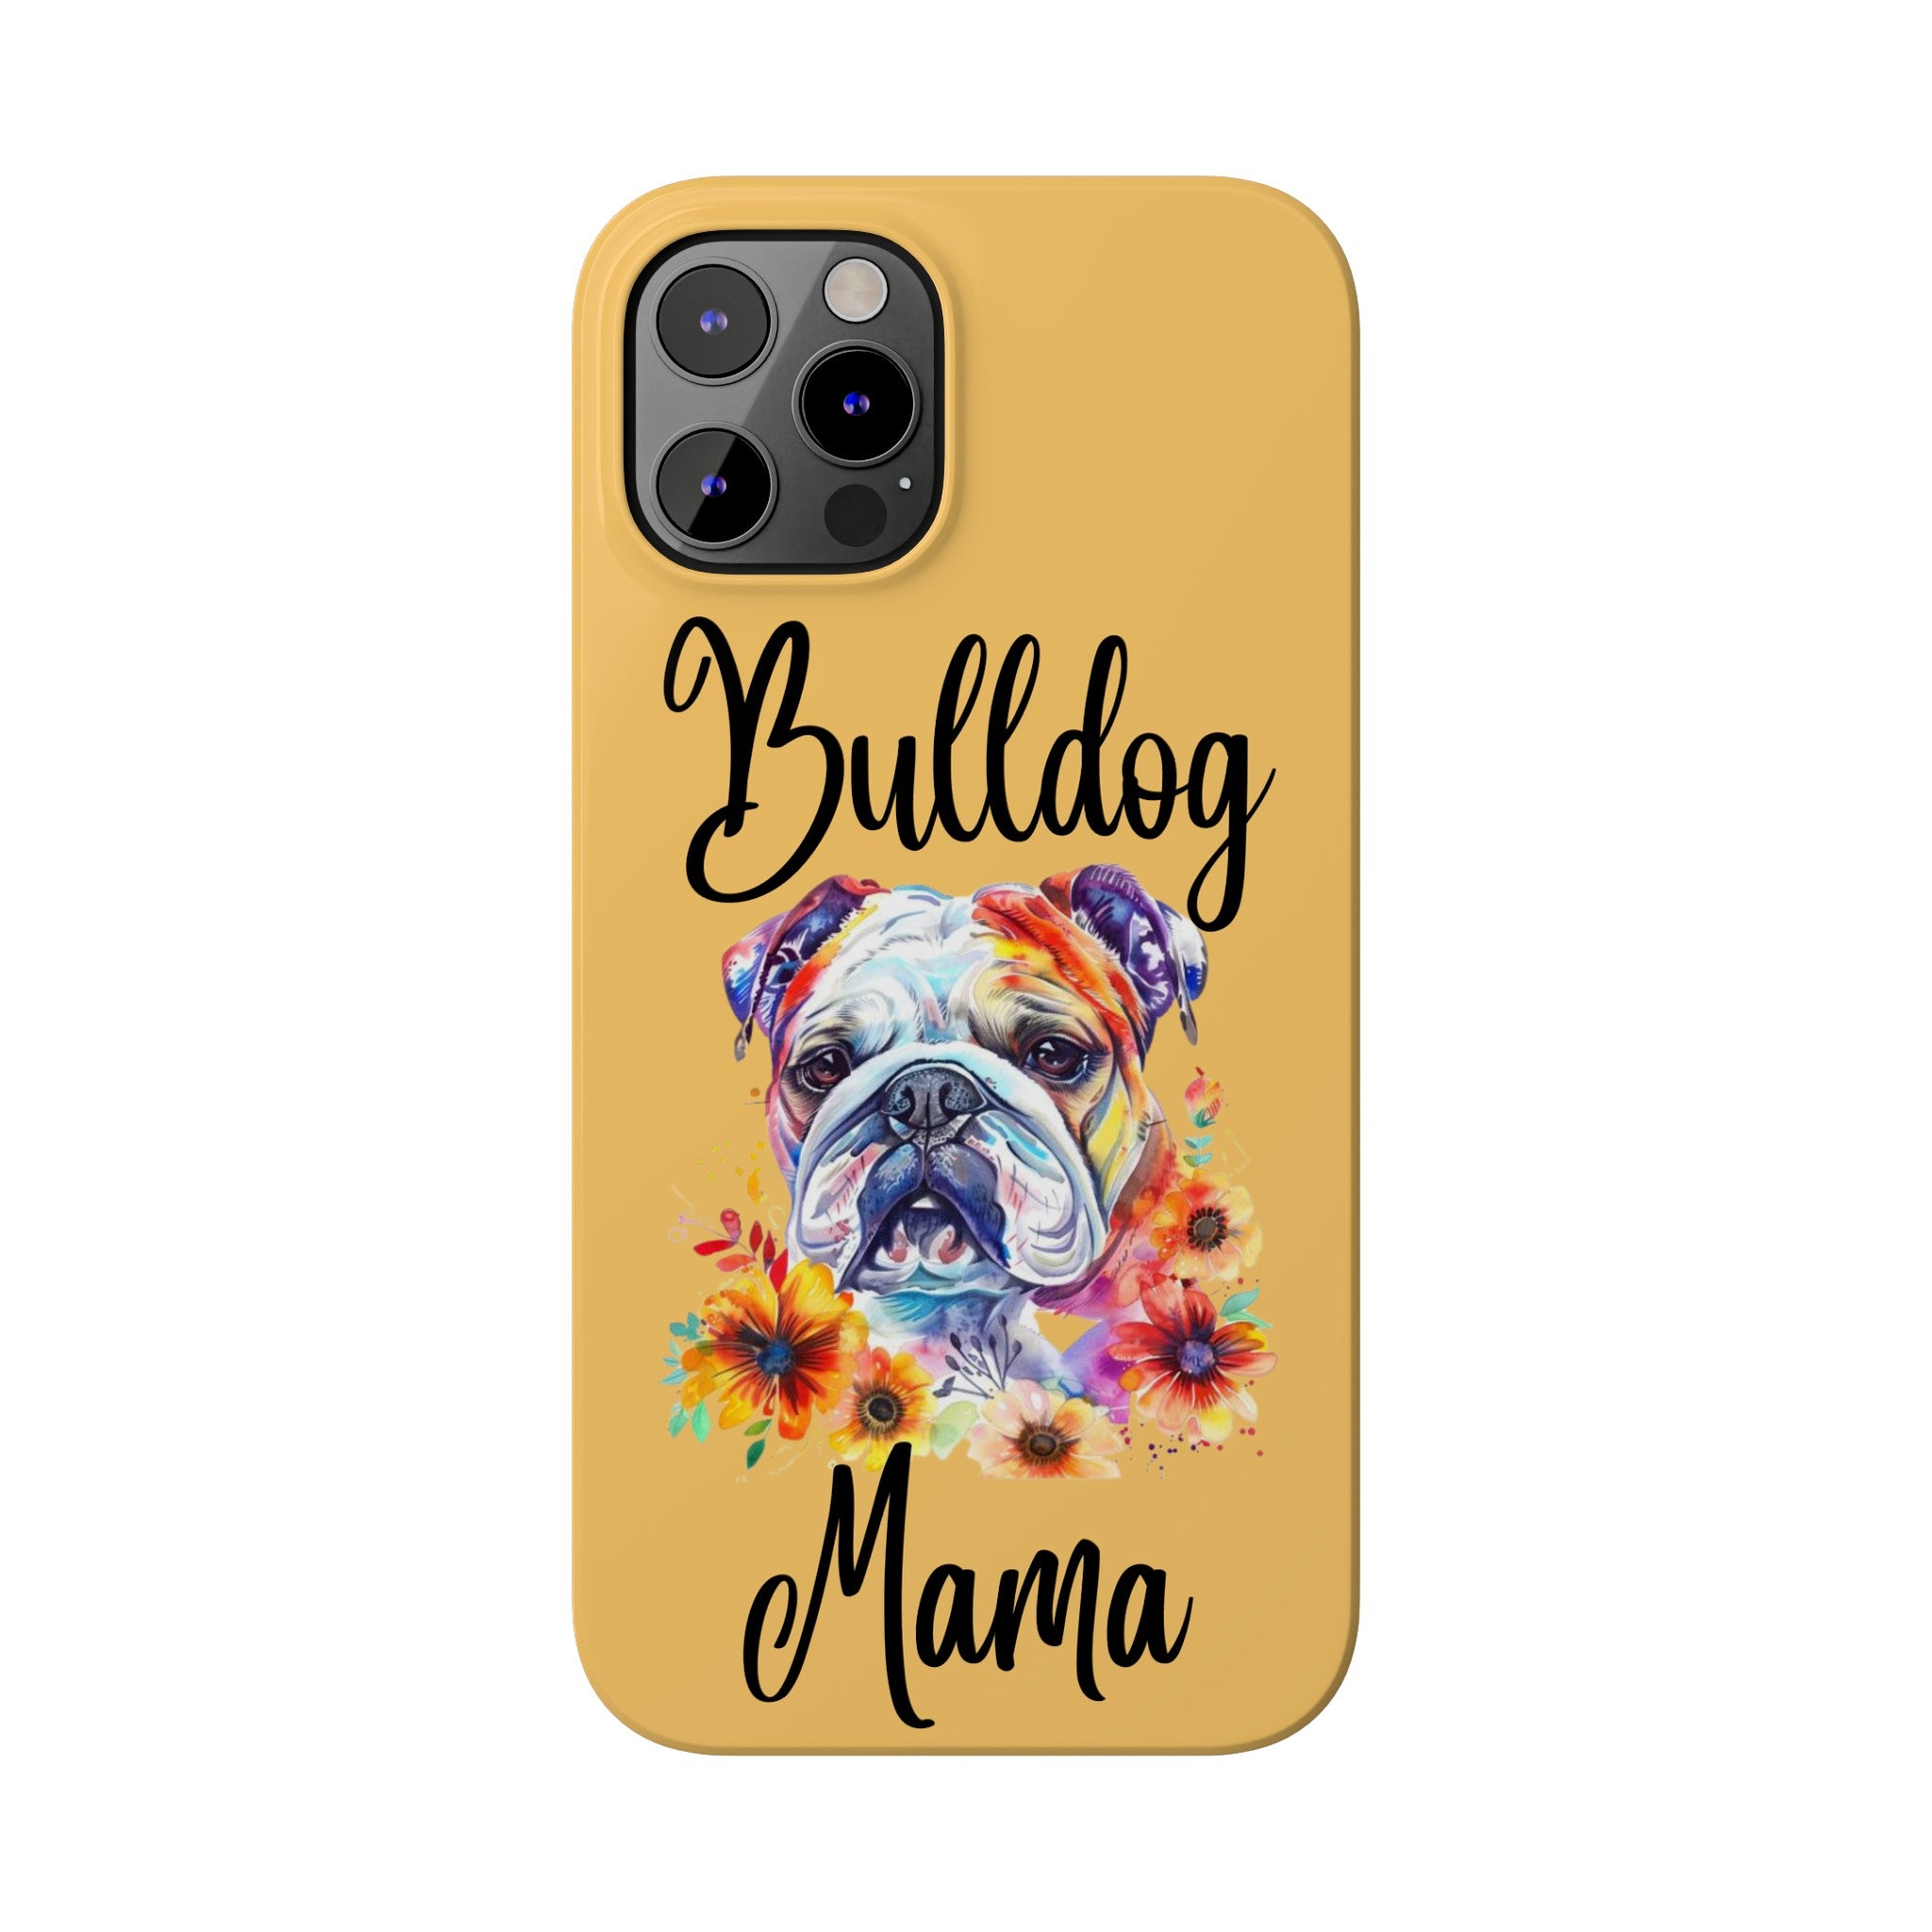 Bulldog iPhone Cases (Engish/watercolor)